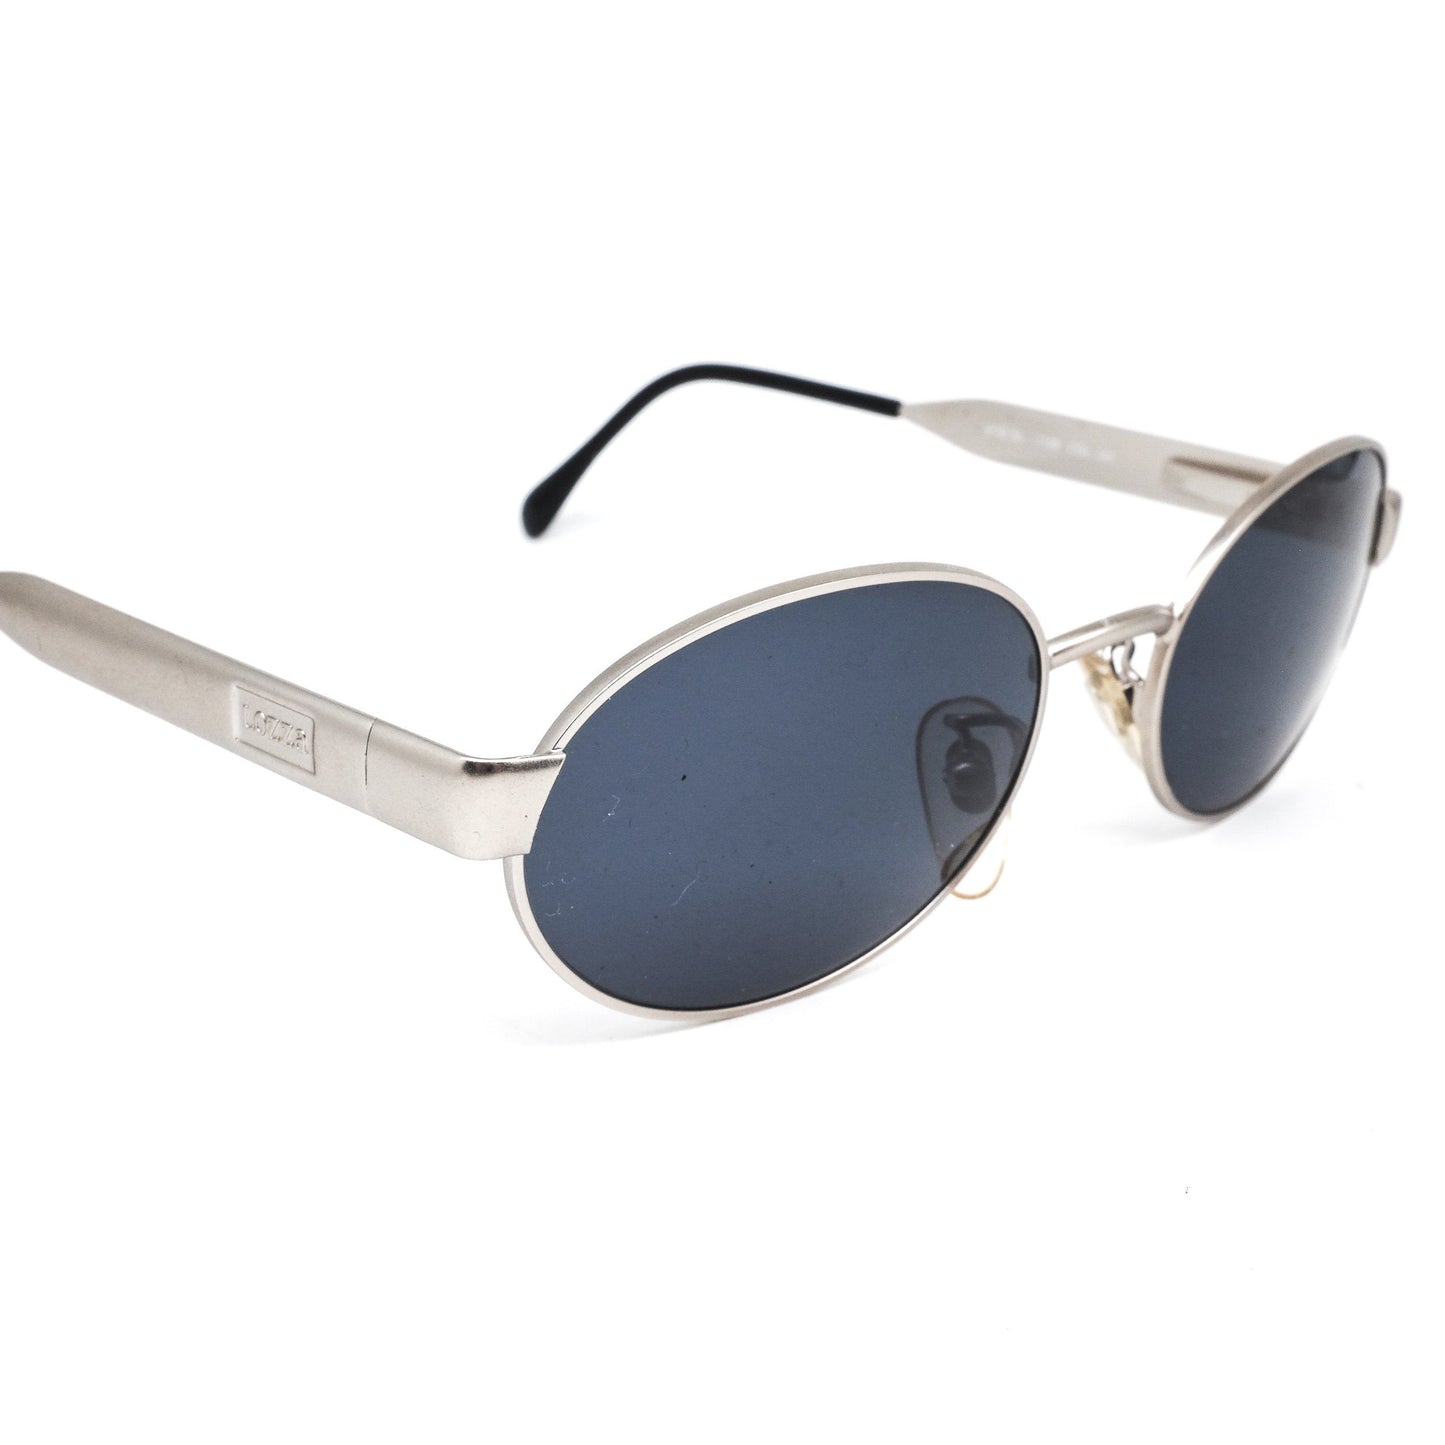 Lozza SL1128 silver metallic sunglasses with black lenses made in Italy 1990s NOS